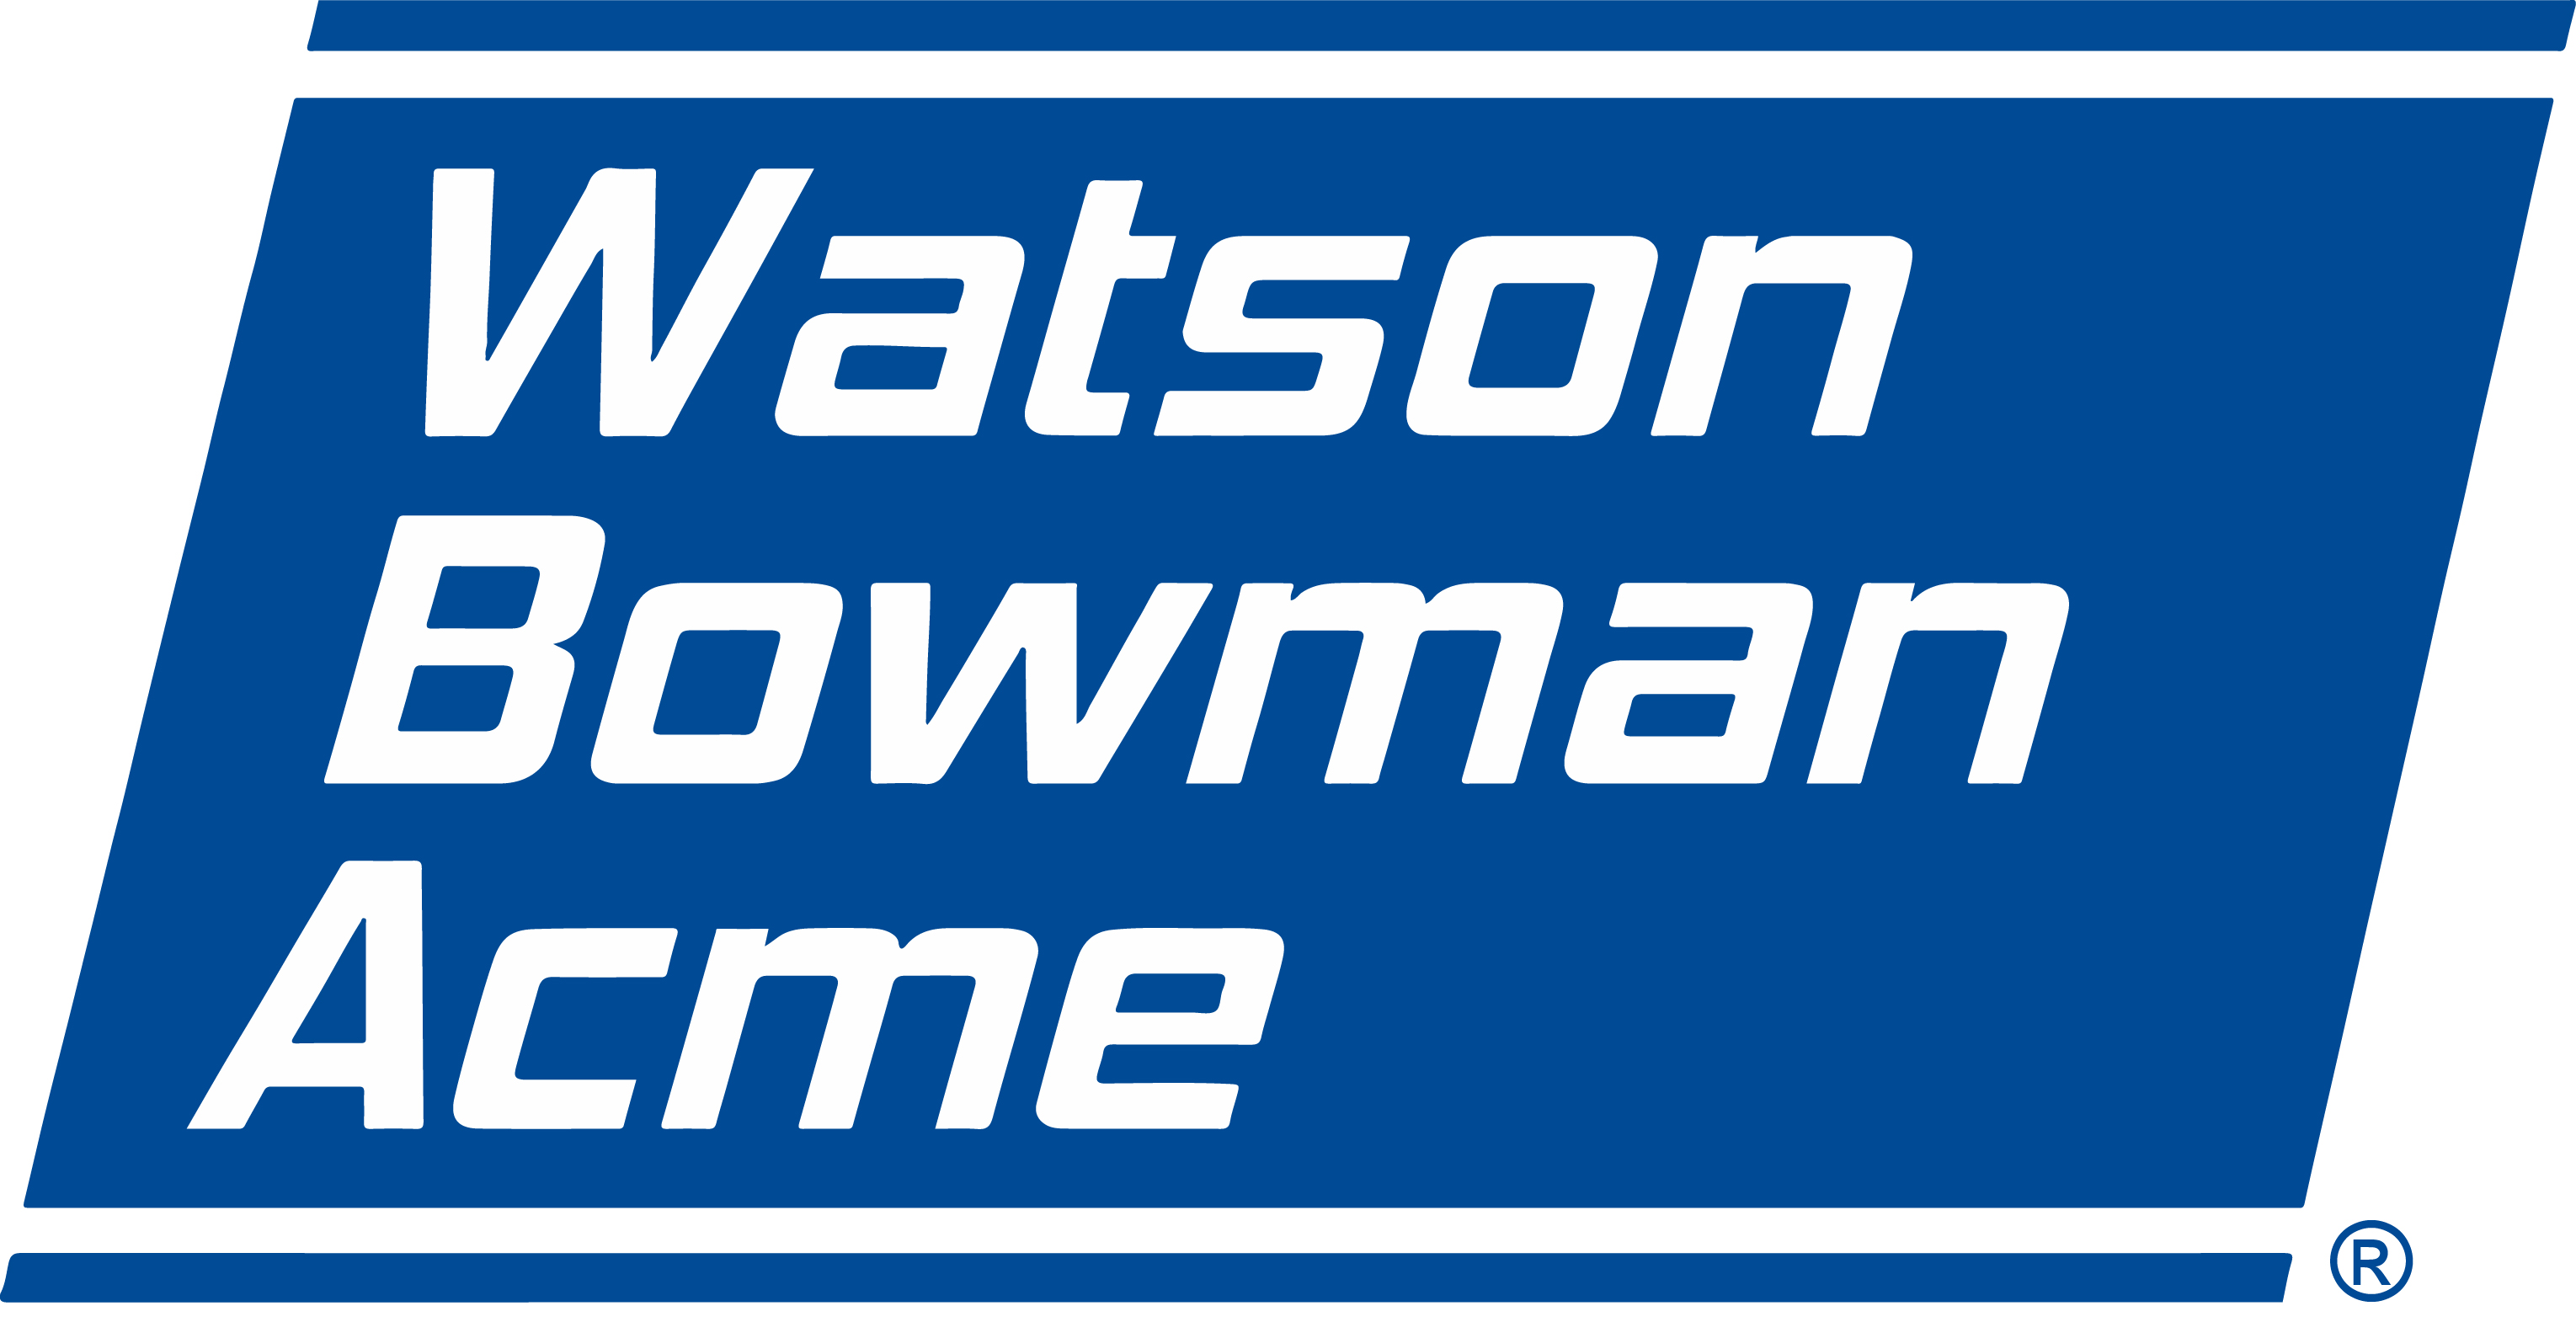  Watson Bowman Acme logo 'We create chemistry'